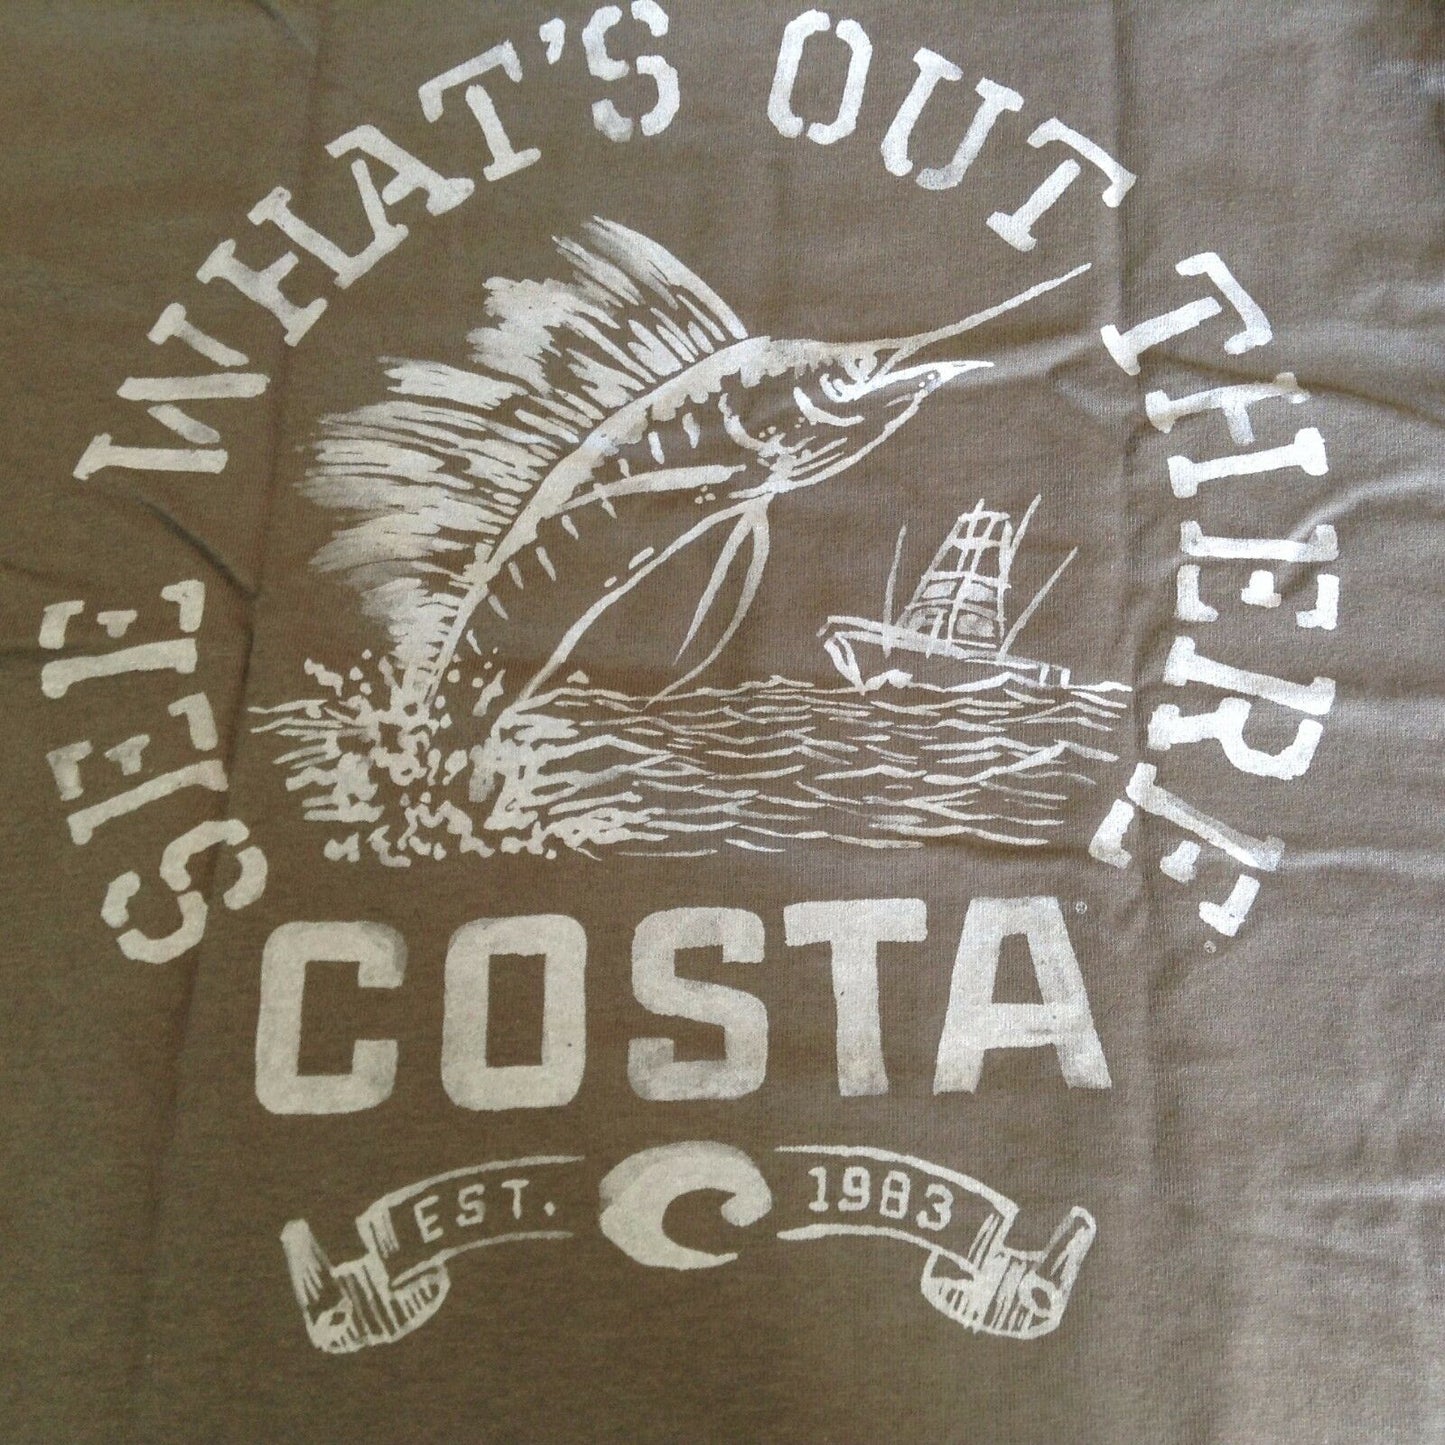 New Authentic Costa Short Sleeve T-Shirt High Tide Gray Medium